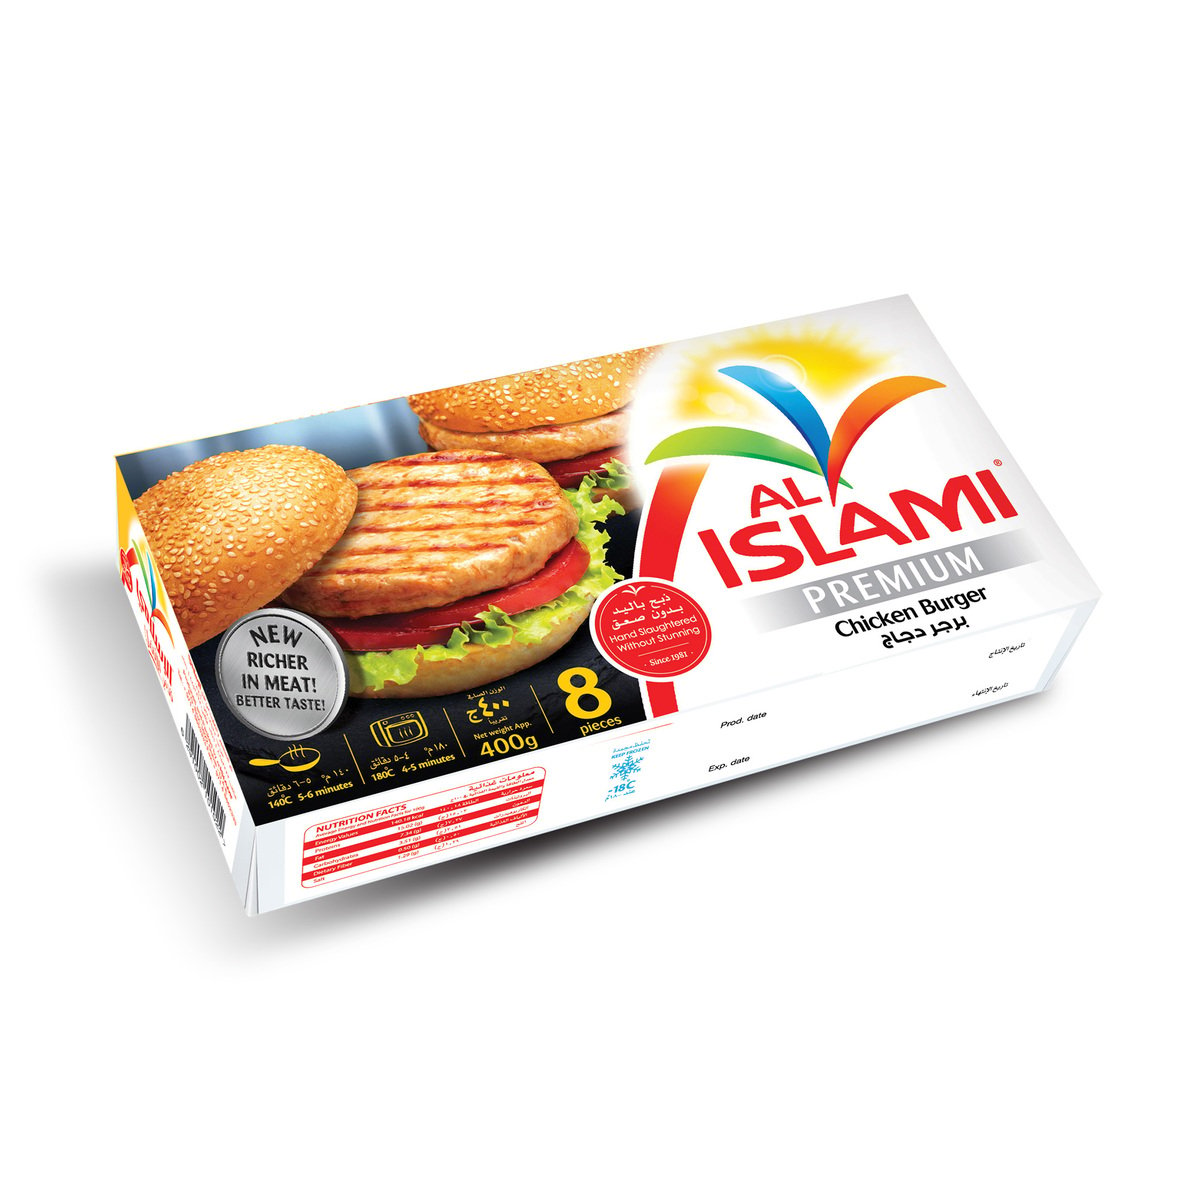 Al Islami Premium Chicken Burger 8 pcs 400 g